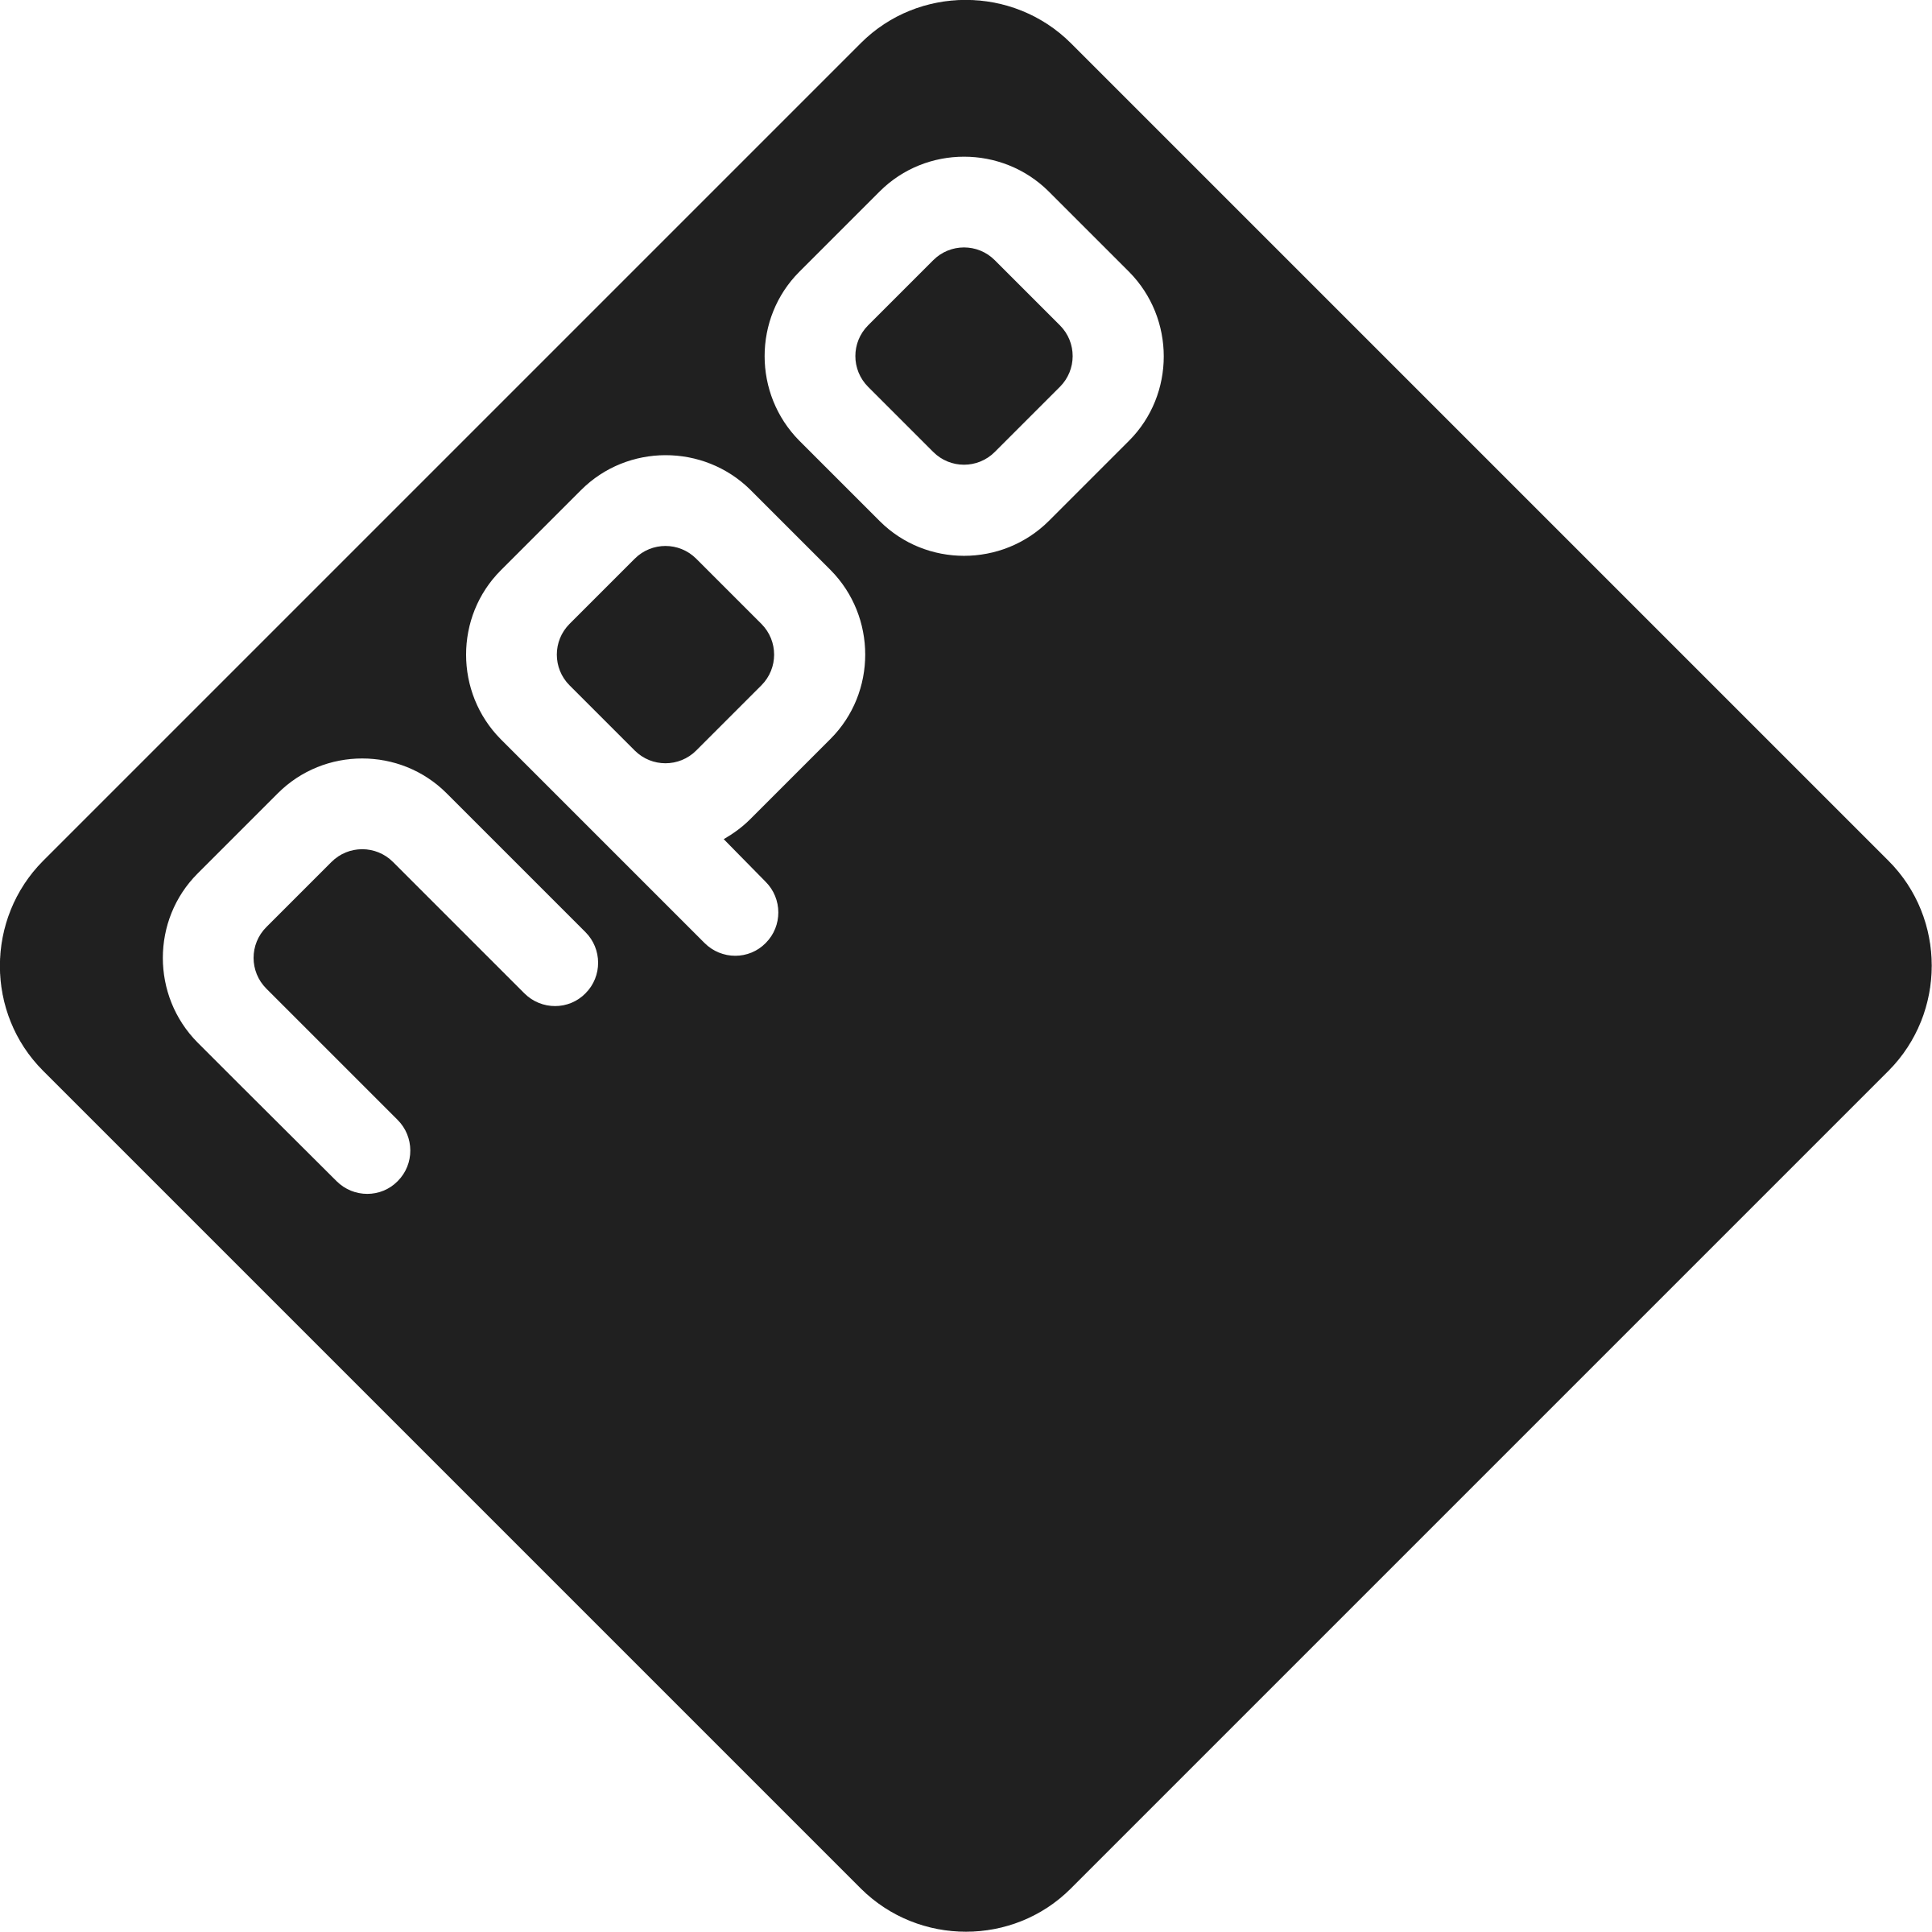 NPO Logo - NPO Logo PNG Transparent & SVG Vector - Freebie Supply